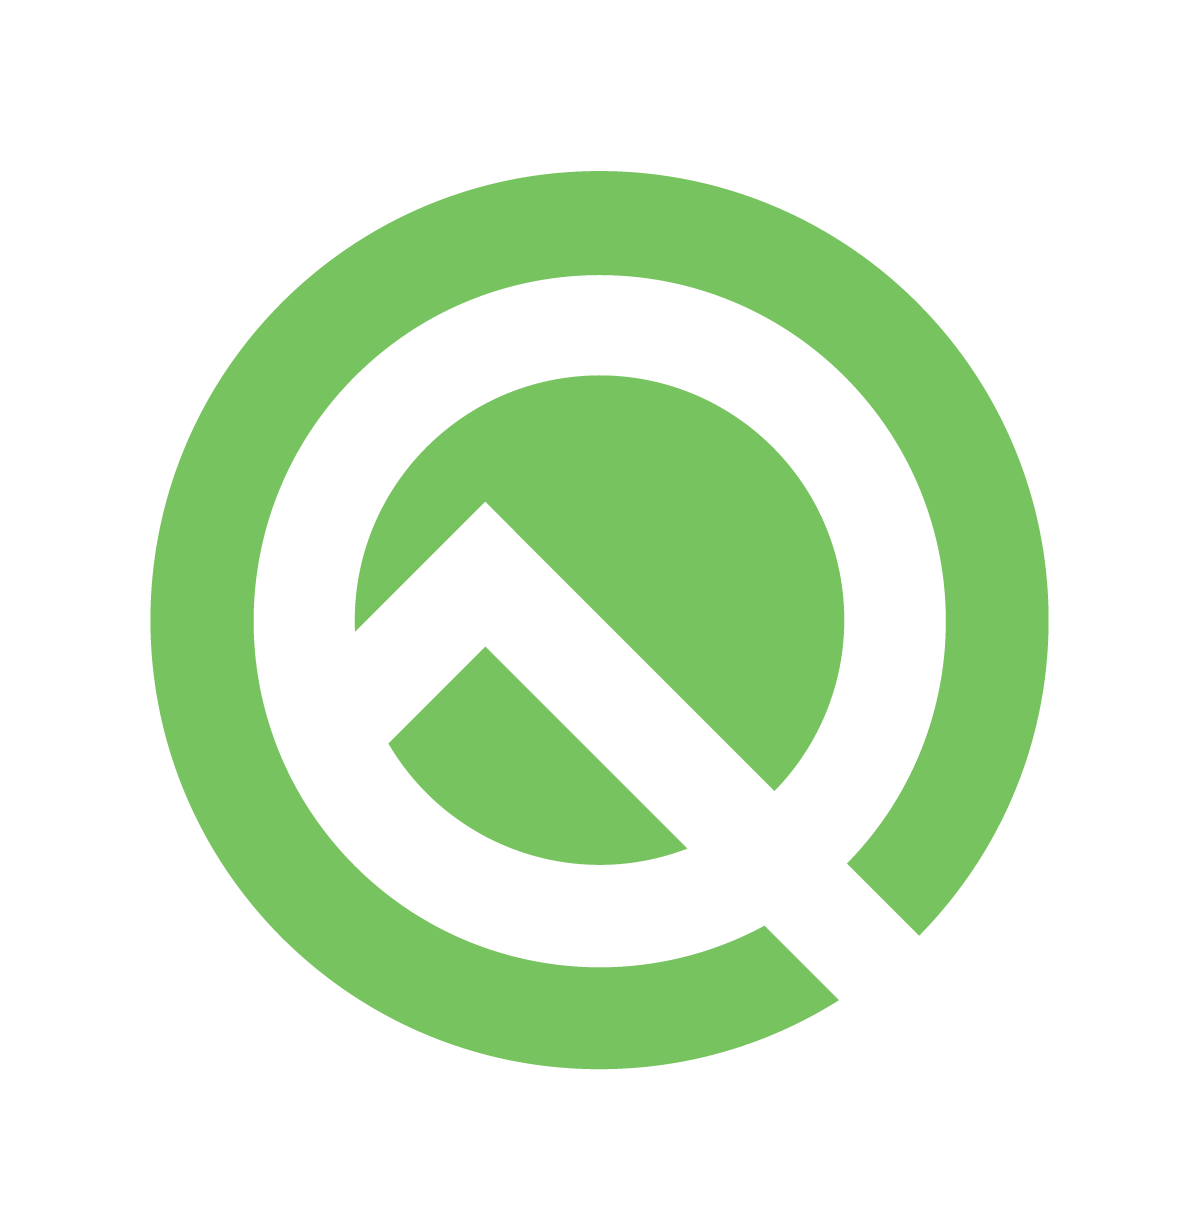 Blogspot Logo - Android Developers Blog